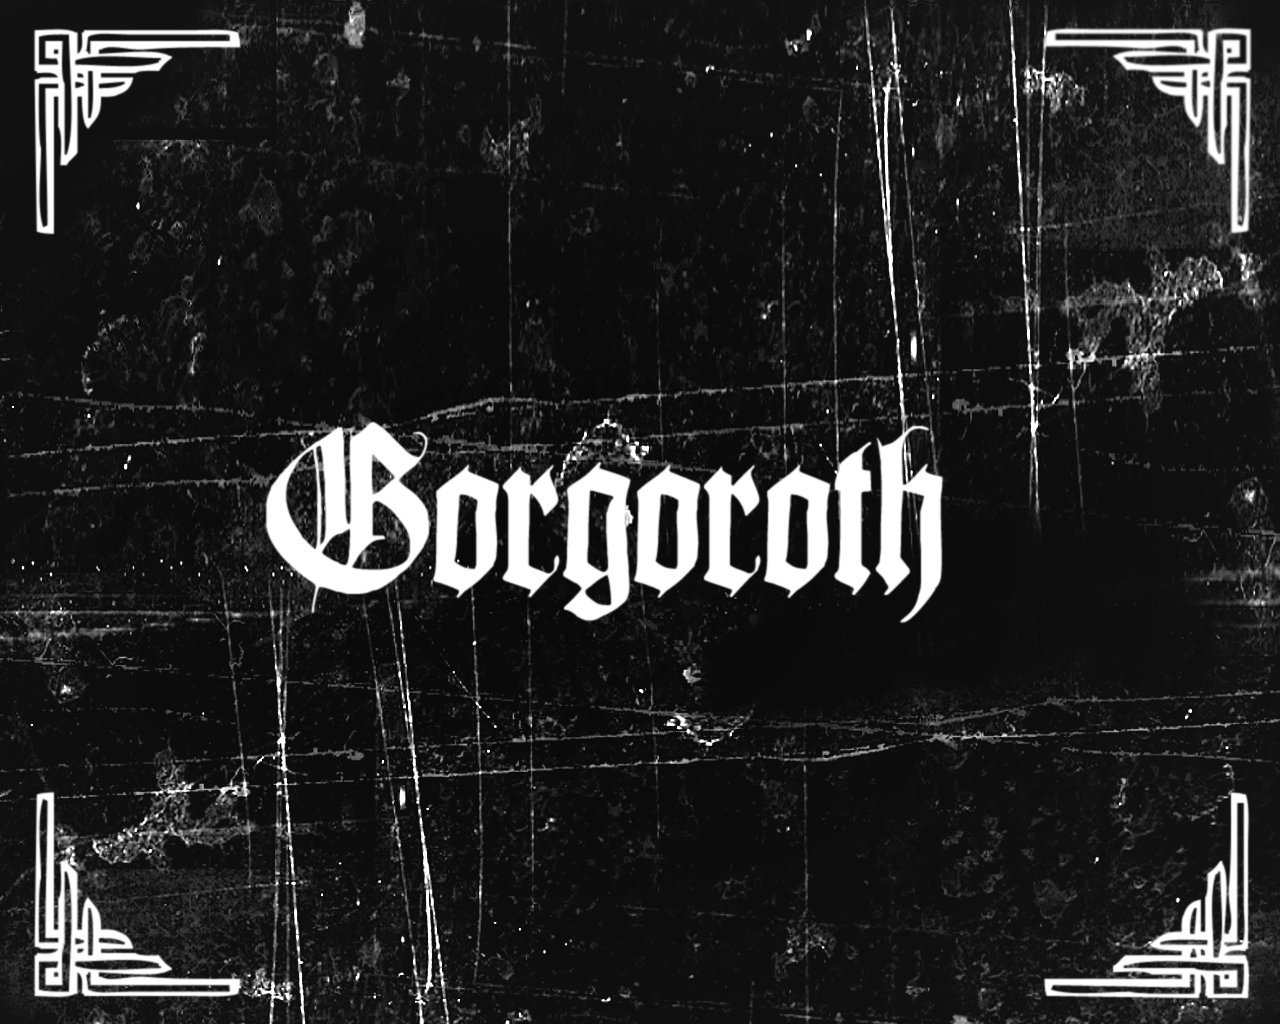 Gorgoroth Grunge Wallpaper By Mefistoteles